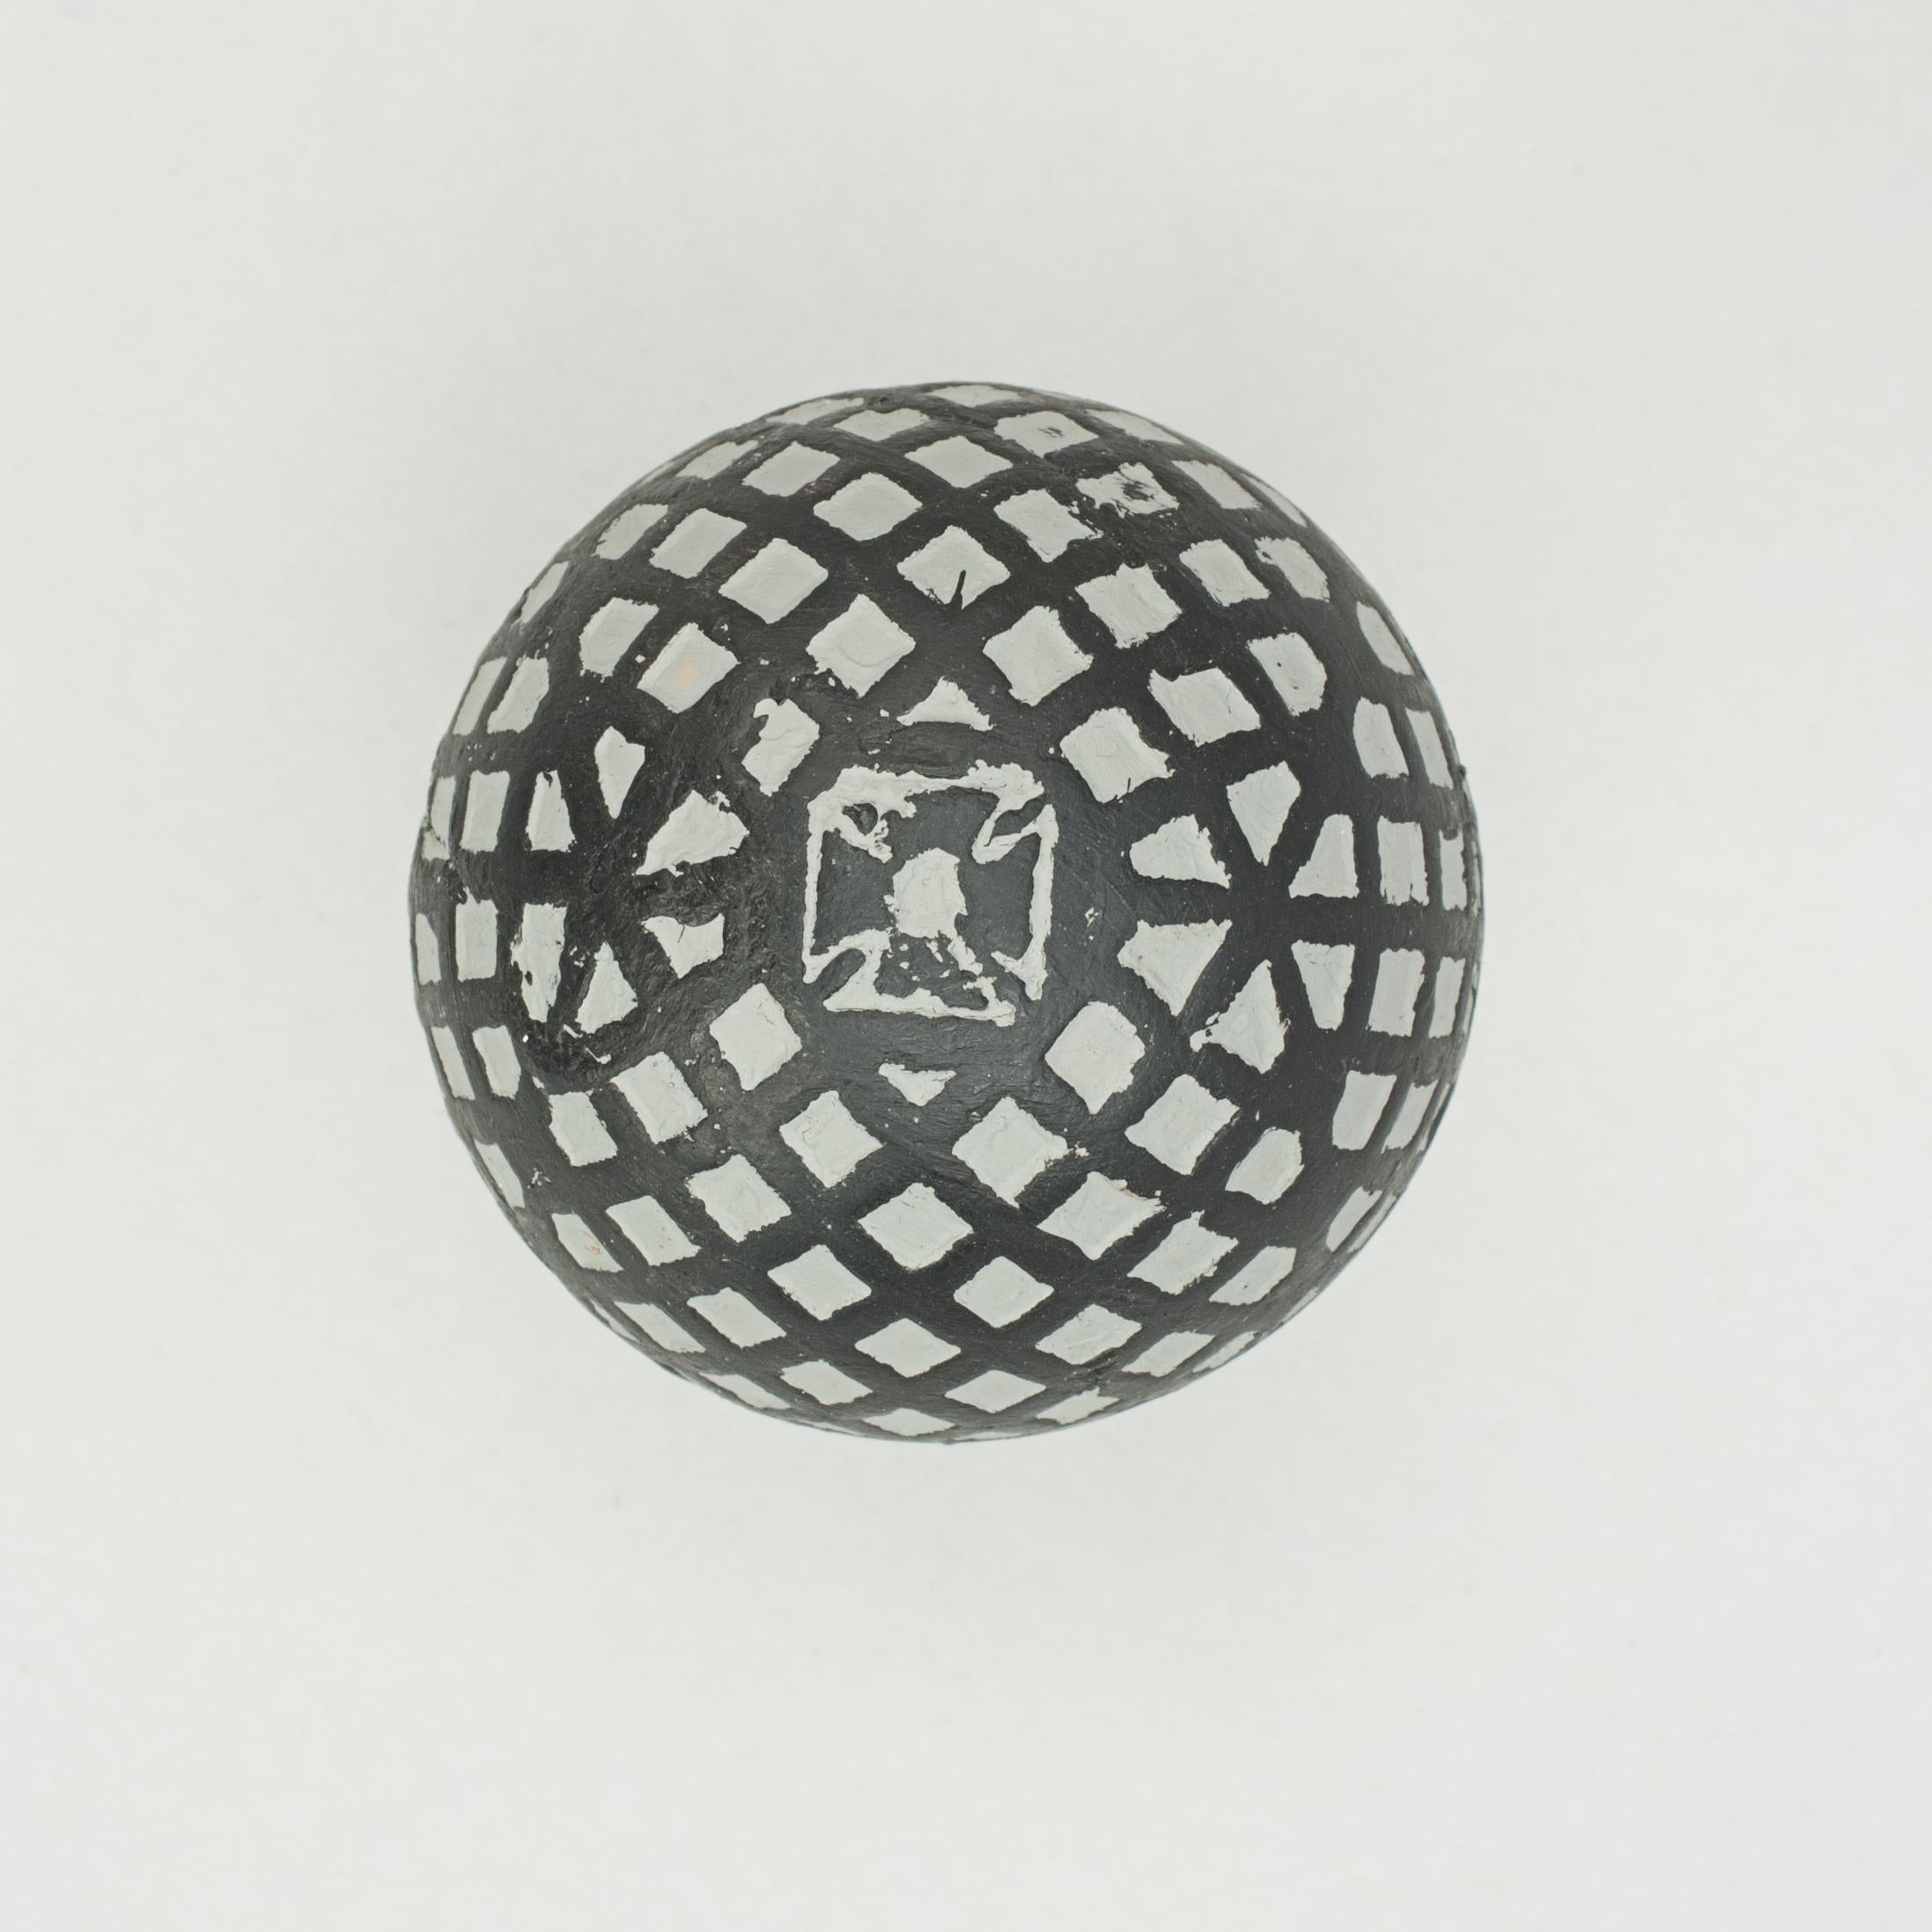 Sporting Art Vintage Mesh Pattern Golf Ball, Rubber Core Maltese Cross, circa 1920